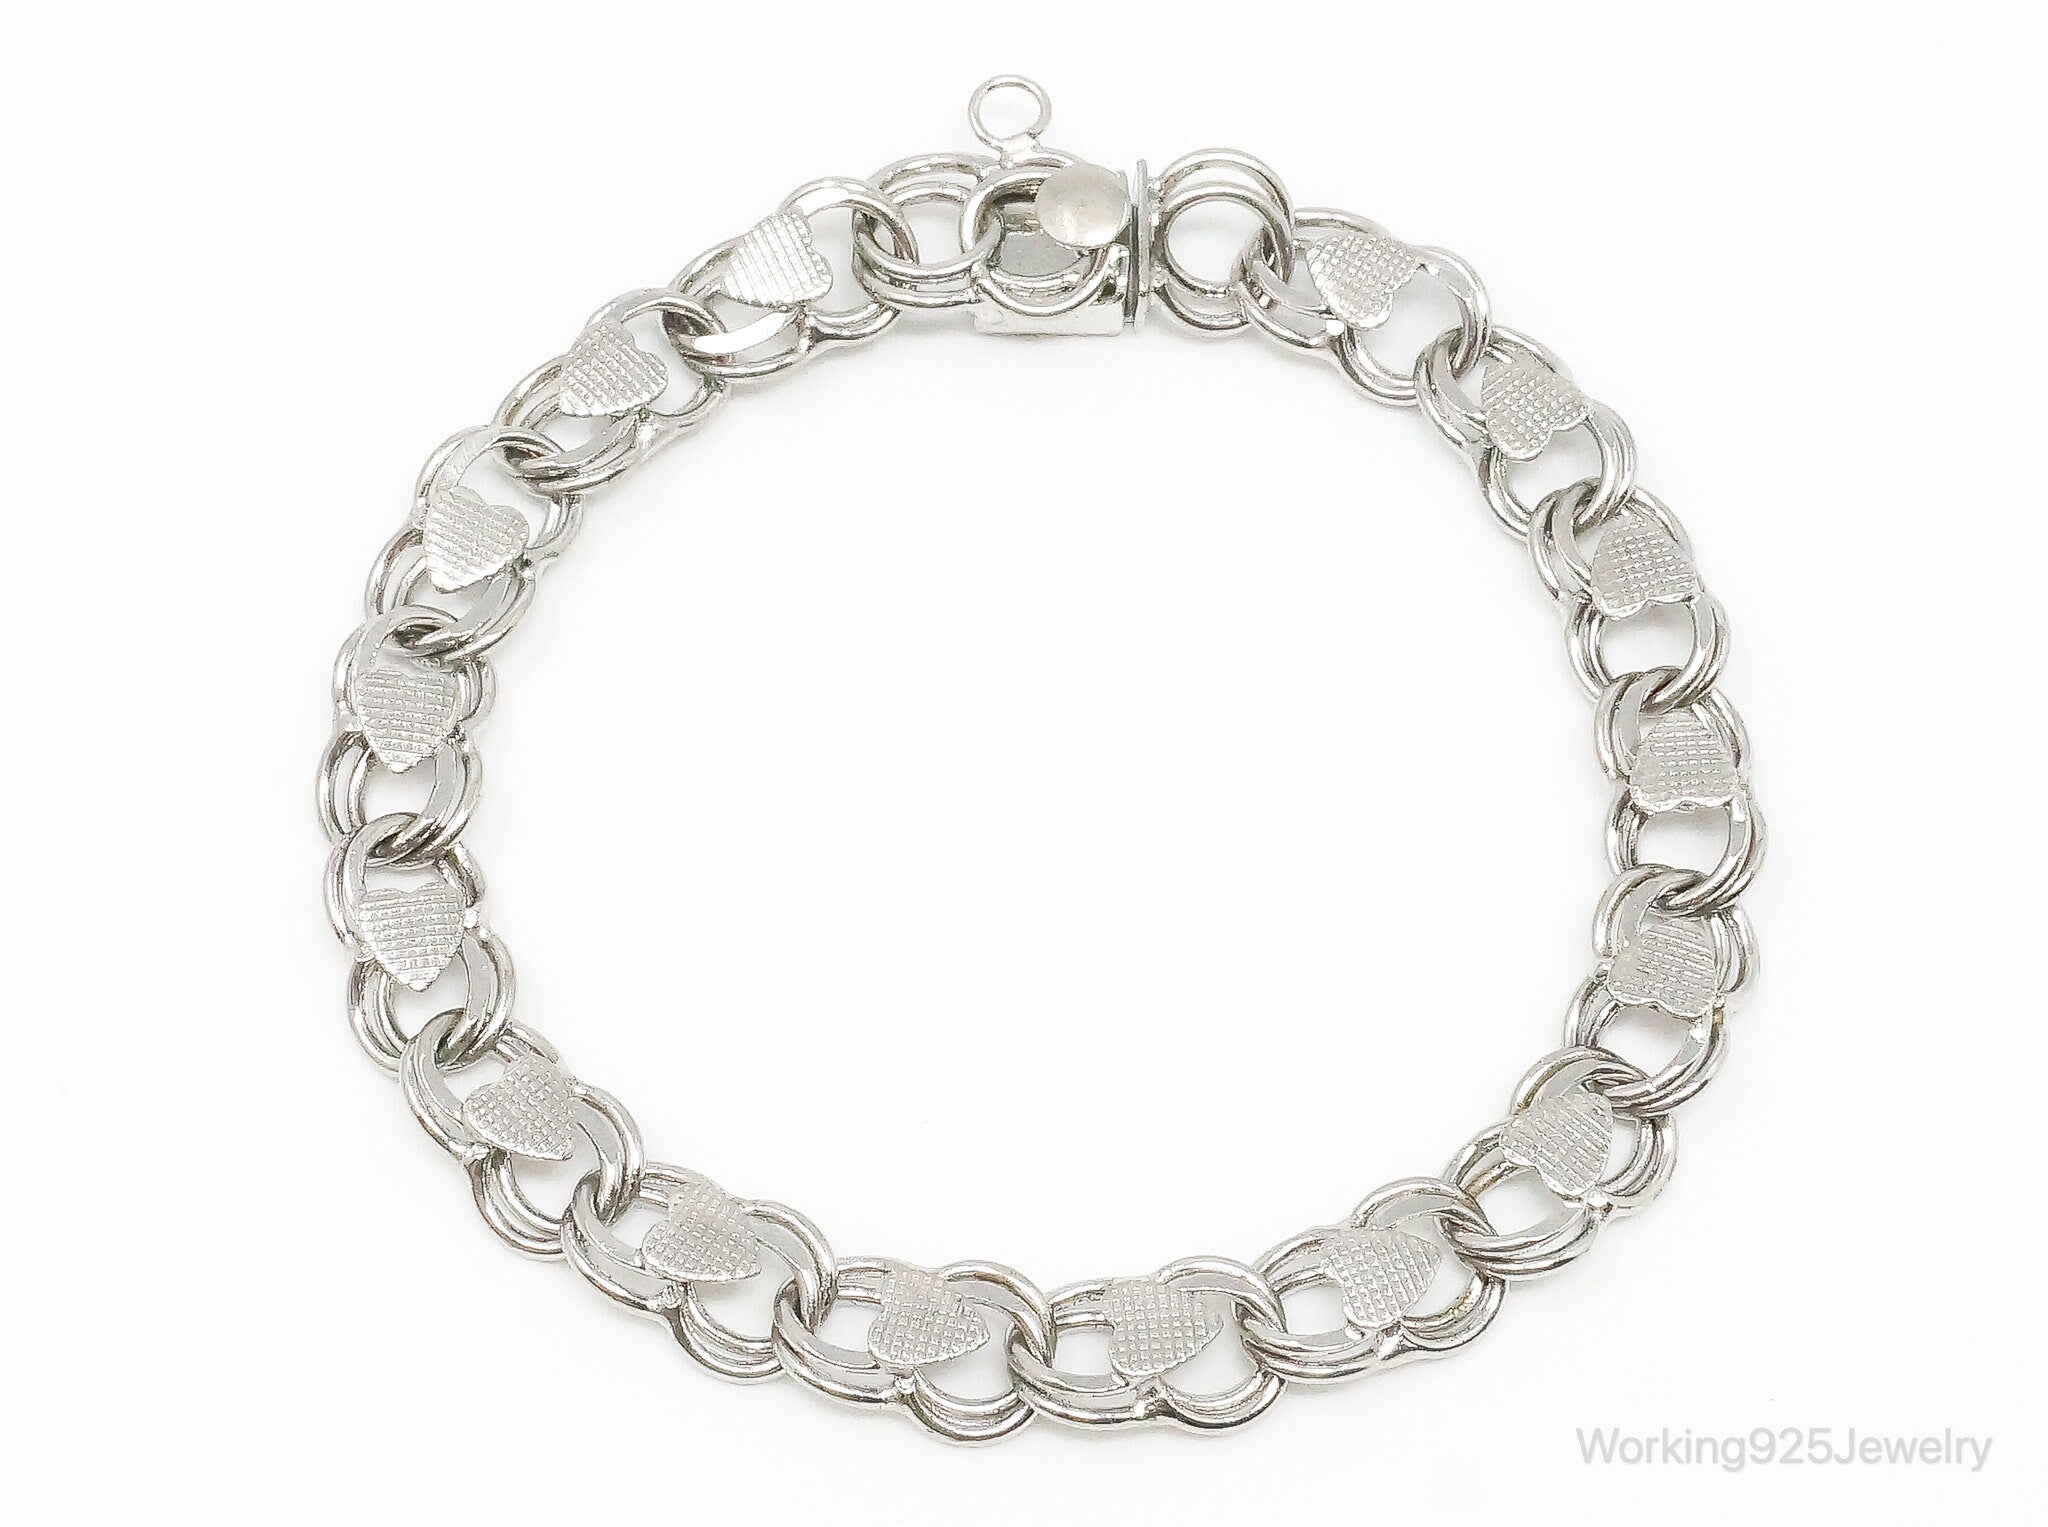 Antique Hearts Chain Link Charm Sterling Silver Bracelet